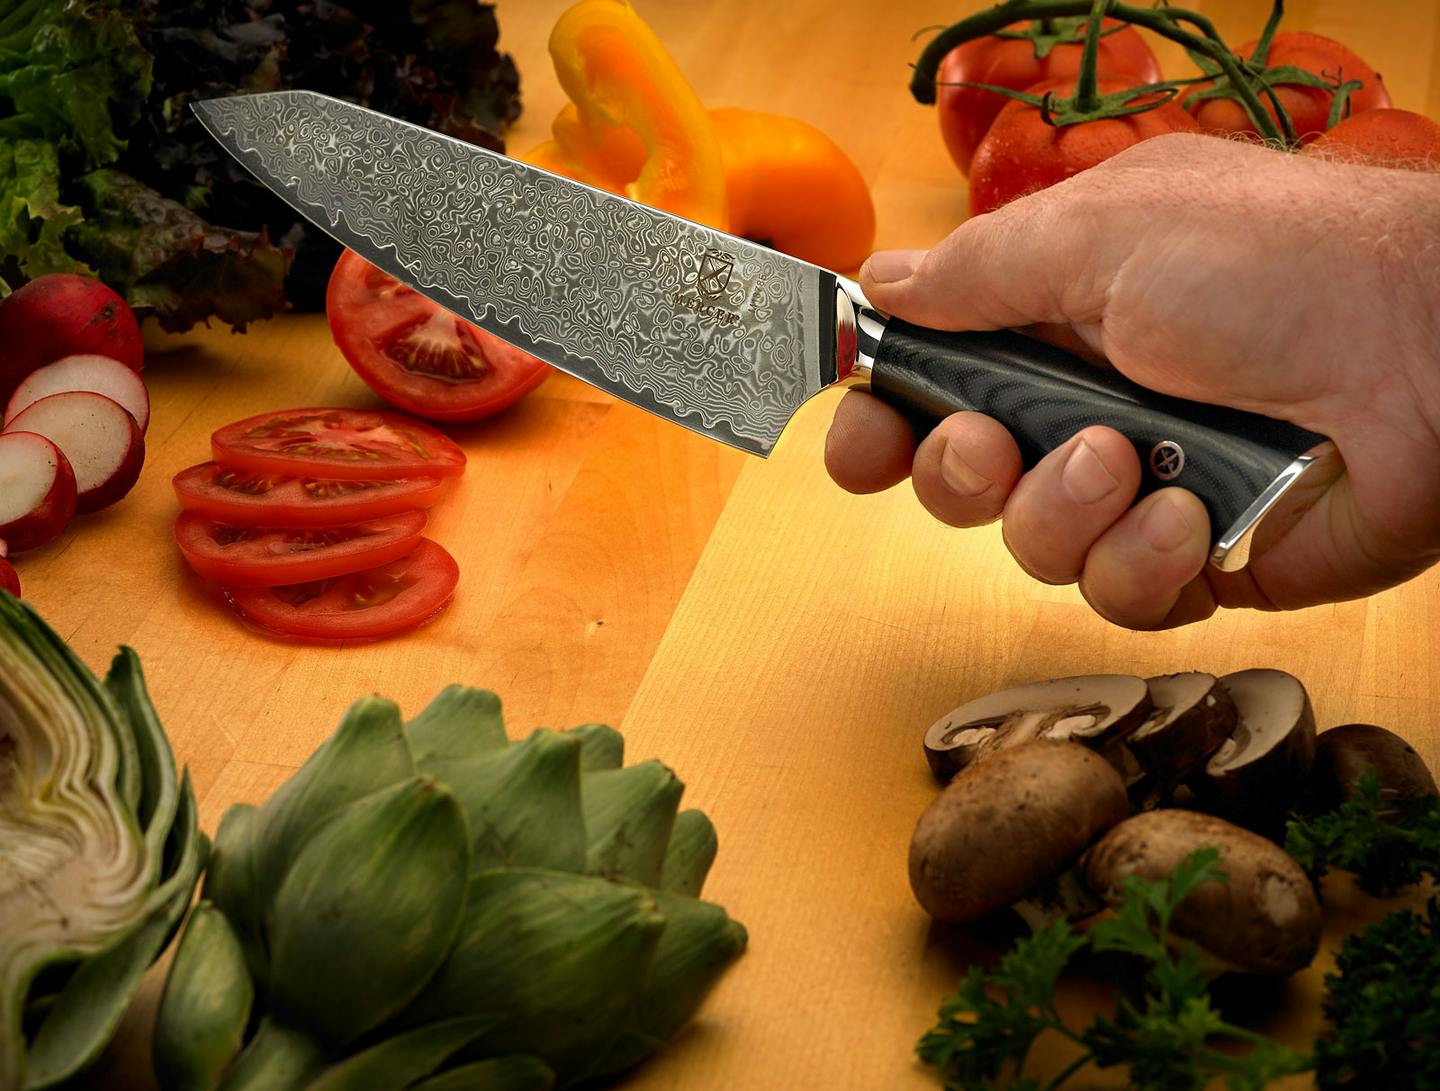 Mercer Culinary 8" Damascus Chef's Knife